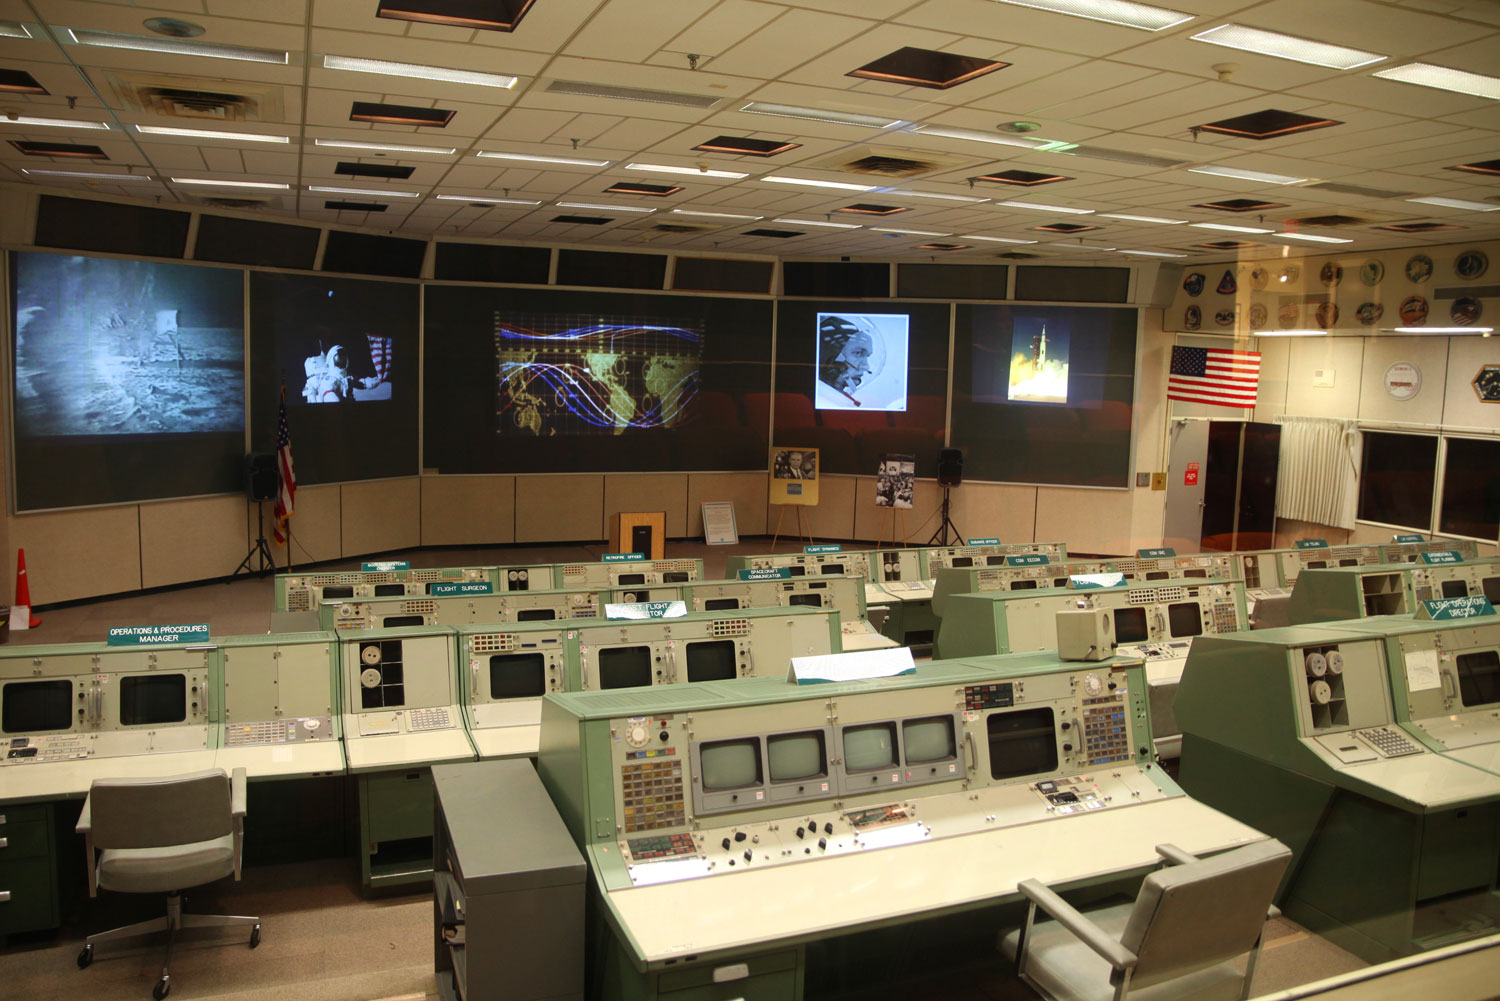 NASA’s historic mission control room in Houston, USA.